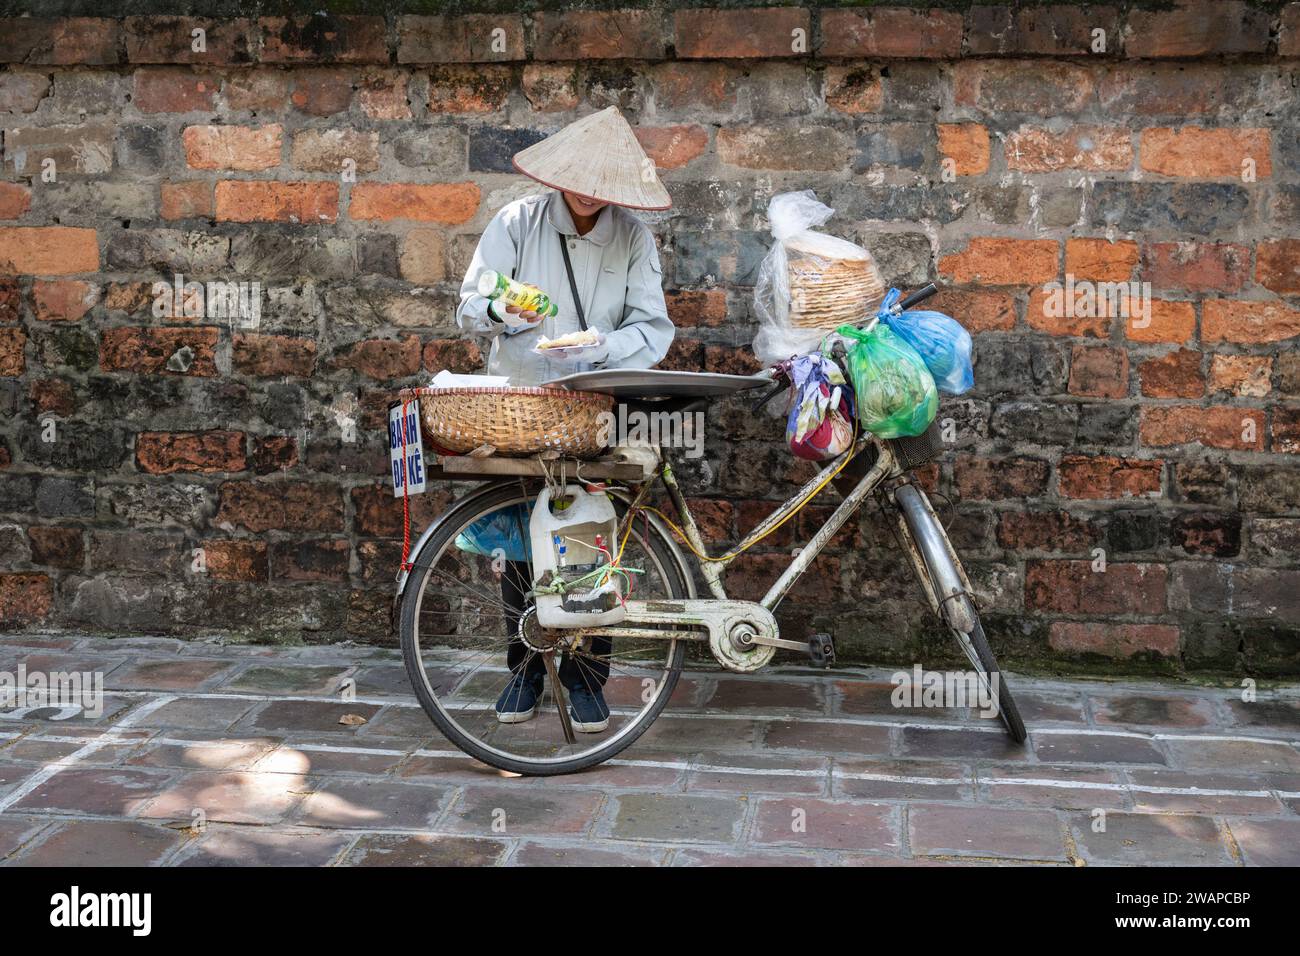 Street vendor selling food in Hanoi, Vietnam Stock Photo